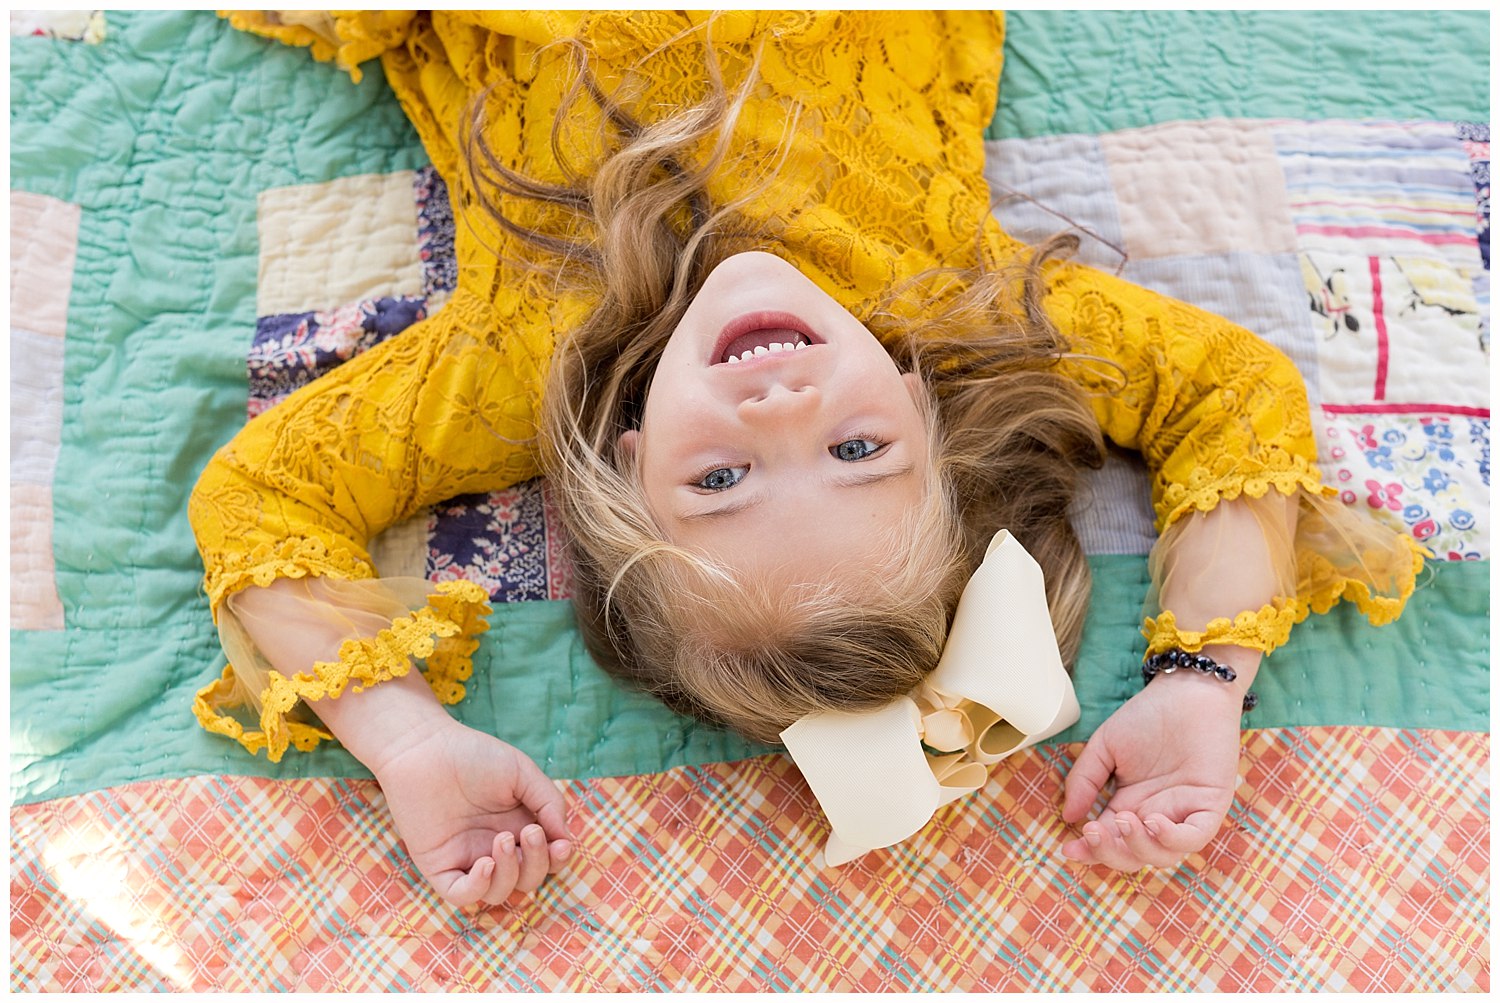 Ocean Springs photographer - colorful portrait of little girl on vintage quilt